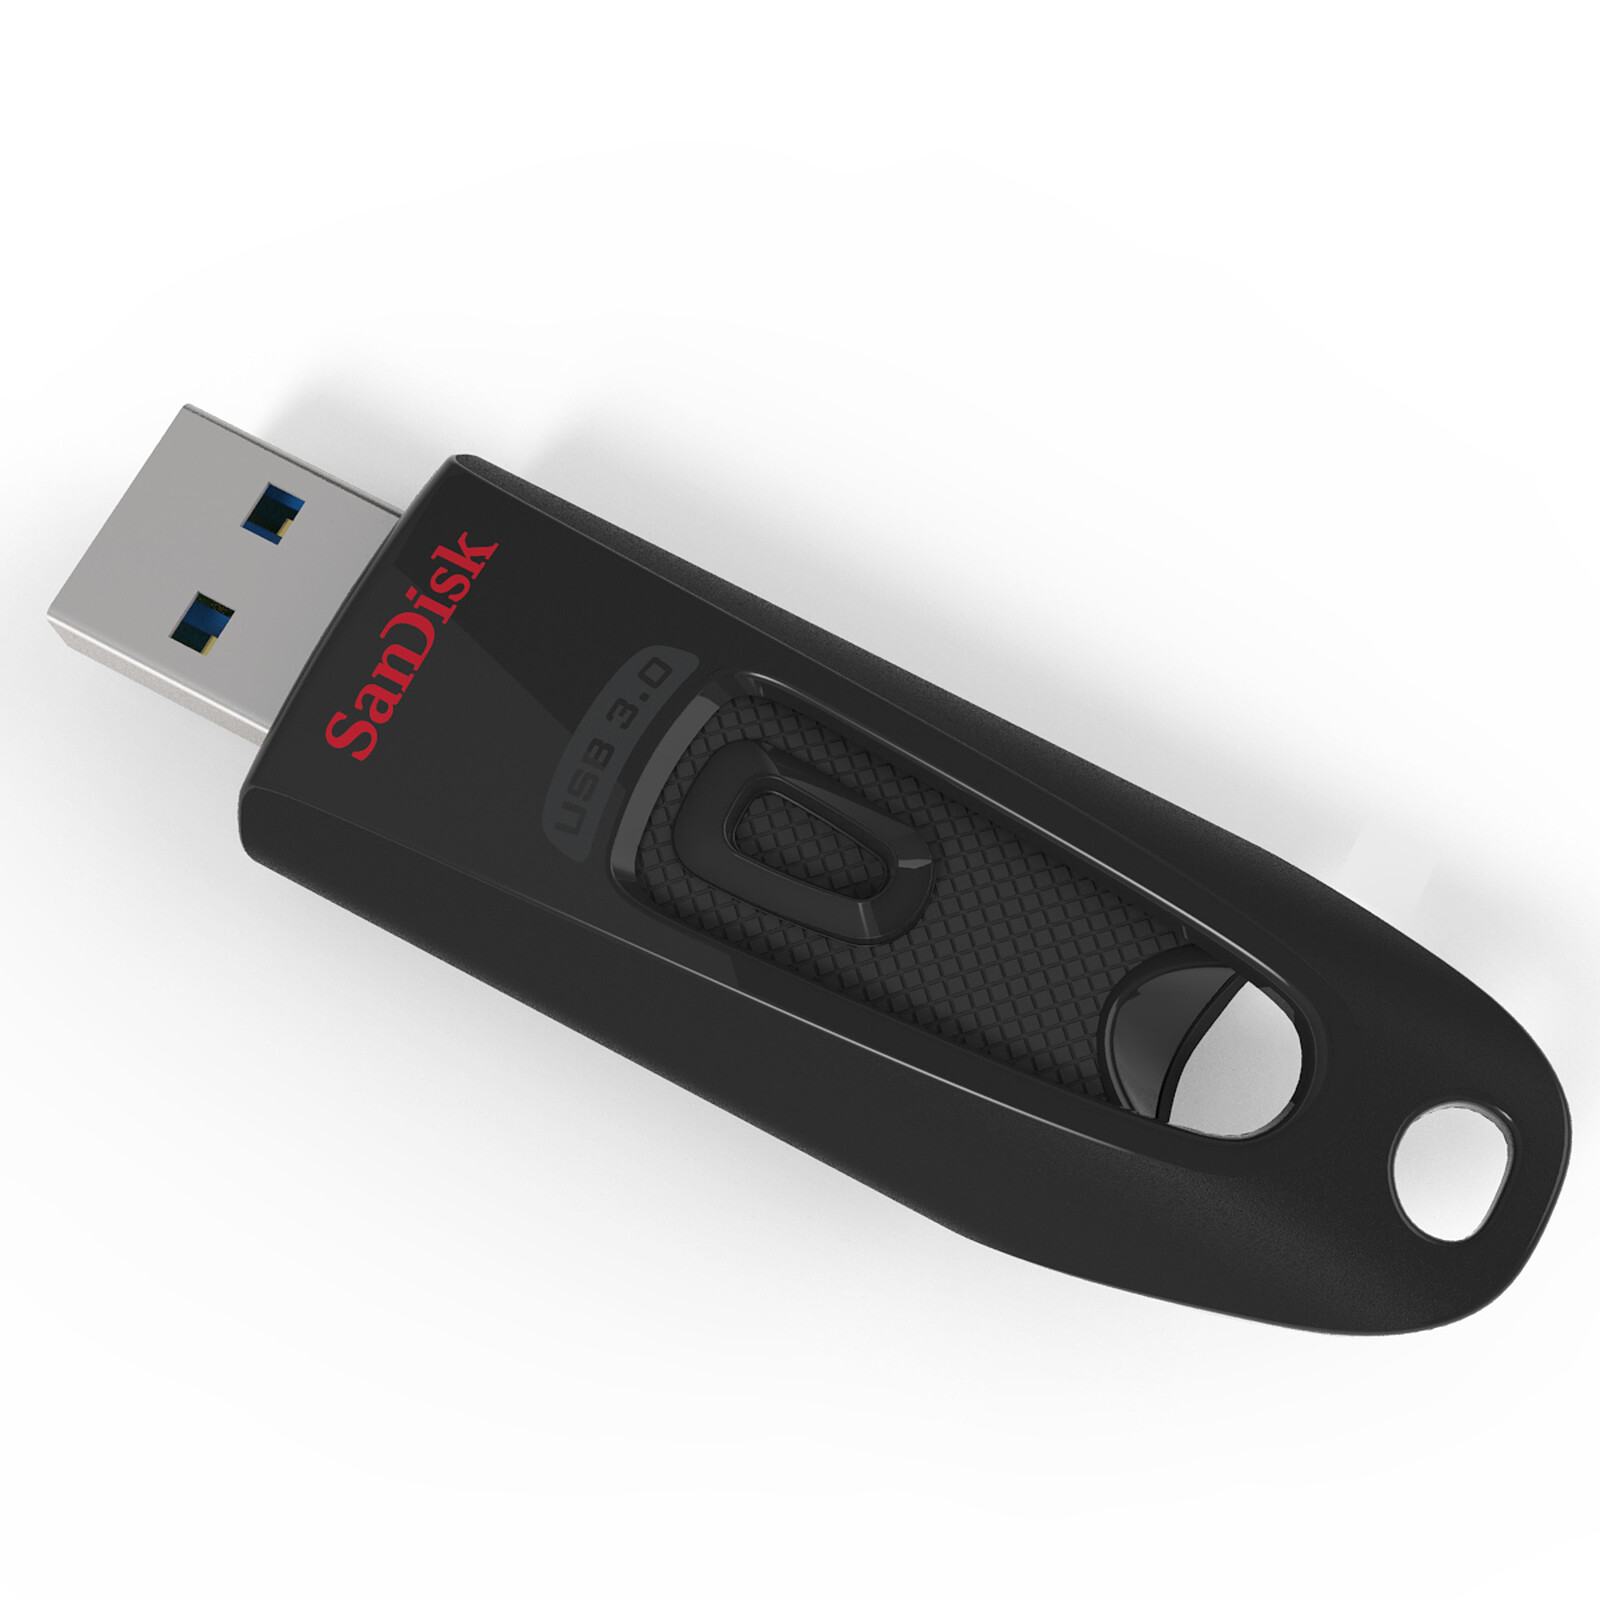 Cle USB Kingston 64 GB 3.0 flash drive noire Original